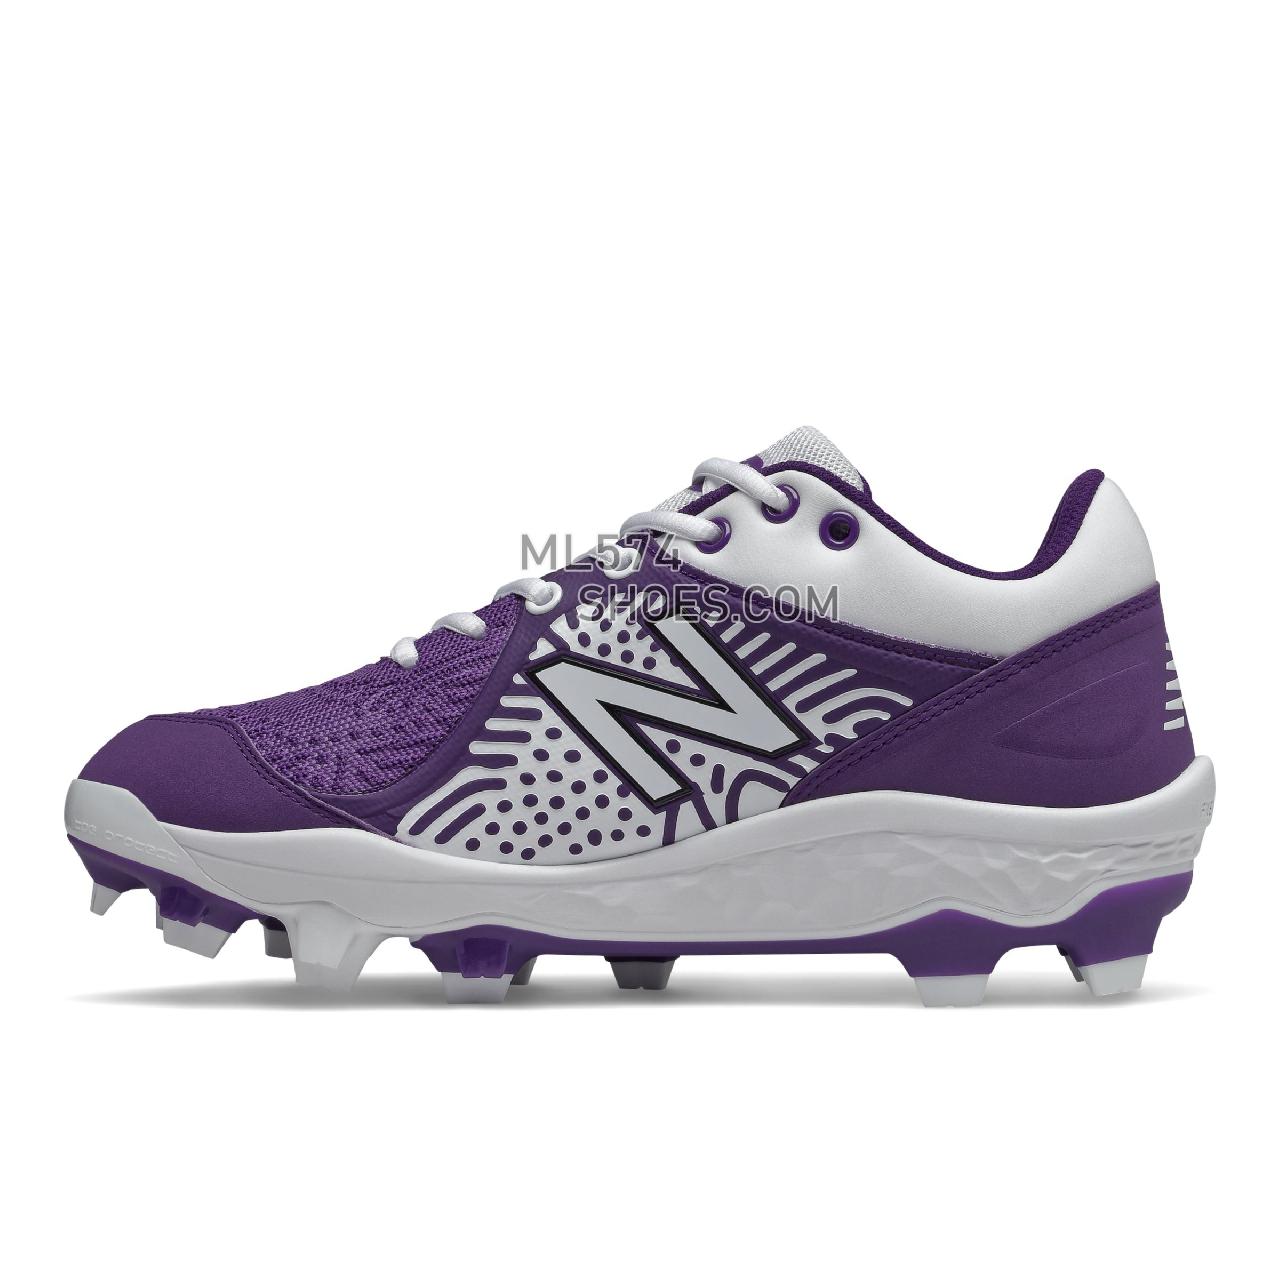 New Balance Fresh Foam 3000 v5 Molded - Men's Mid-Cut Baseball Cleats - Purple with White - PL3000P5